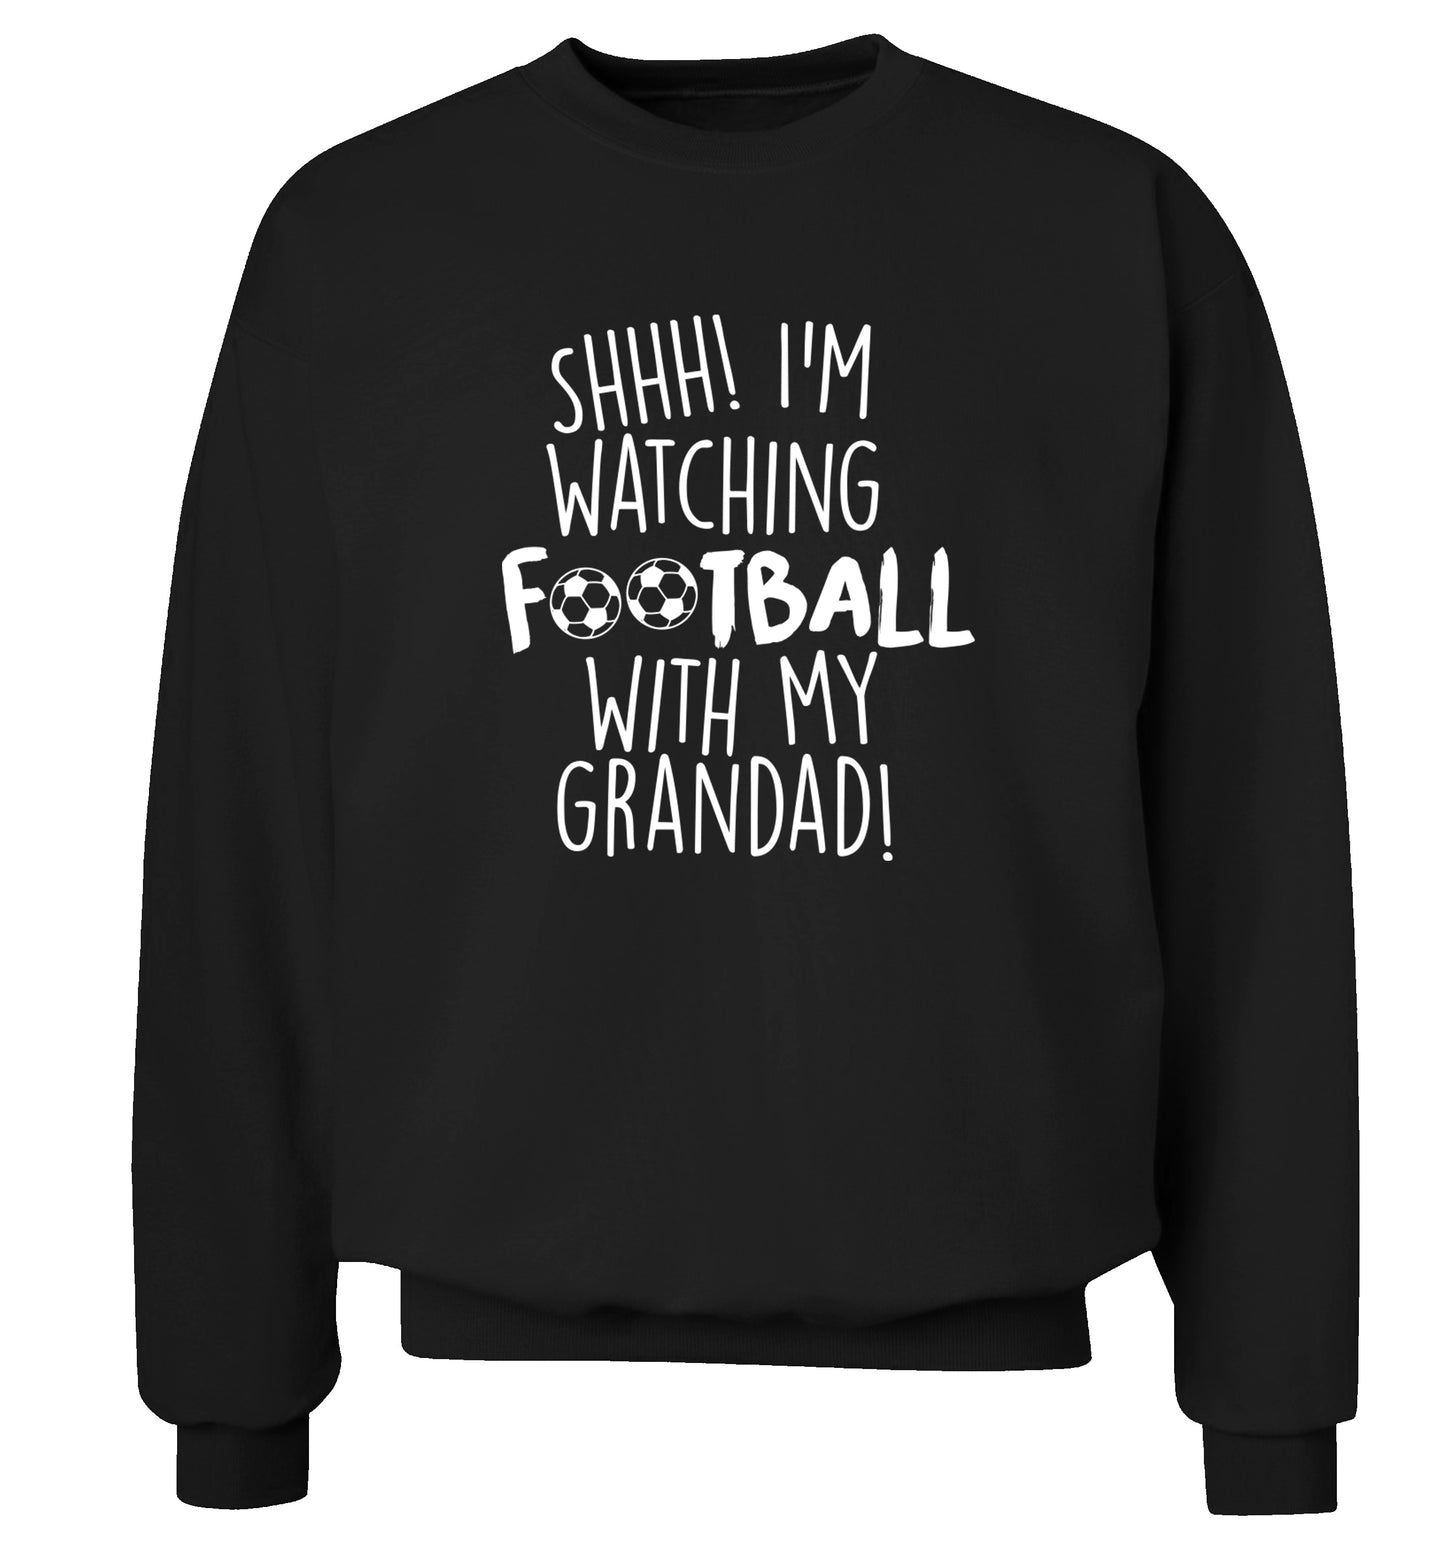 Shhh I'm watching football with my grandad Adult's unisexblack Sweater 2XL